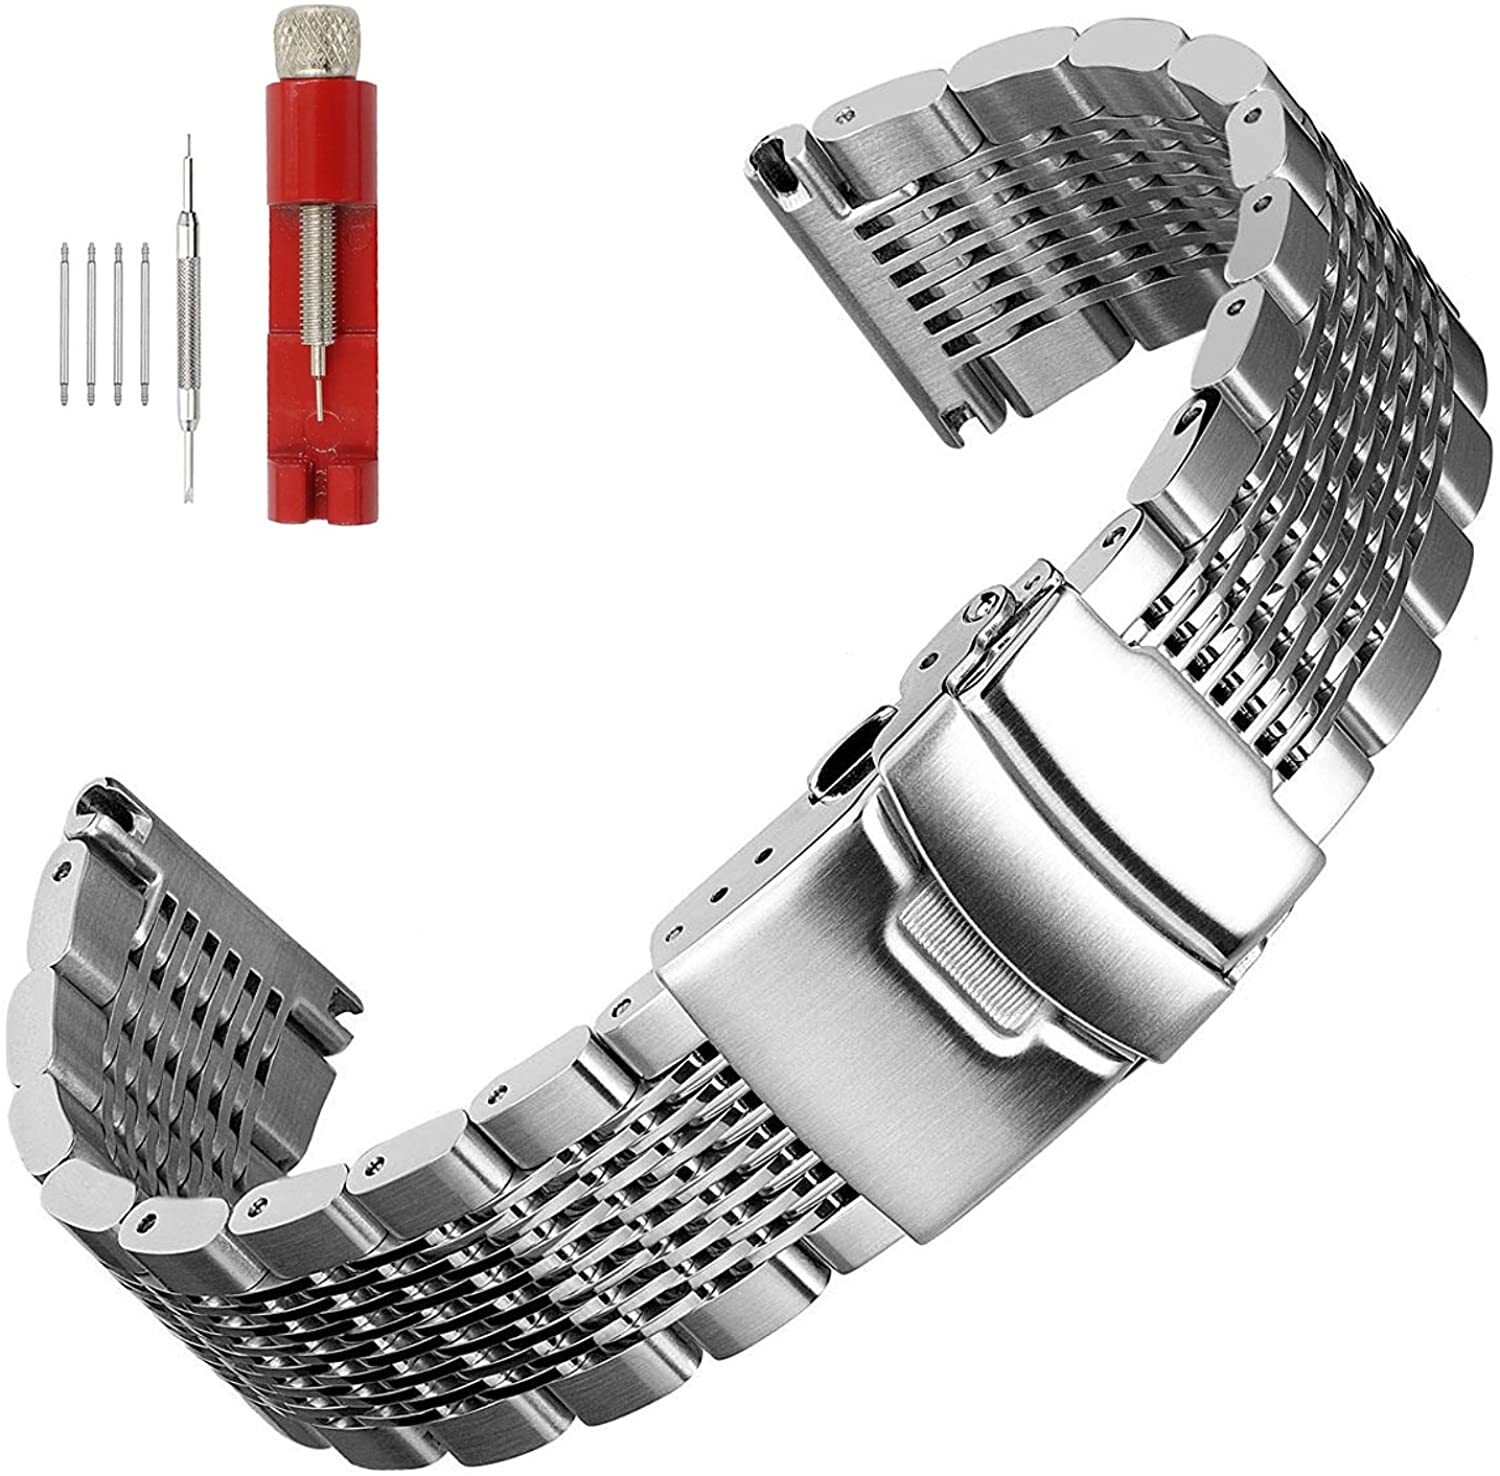 Steel watch band. Браслет для Seiko 5 18 mm. Stainless Steel браслет для часов. Браслет для Fossil Jr-1227. Браслет для часов Solid 18мм.